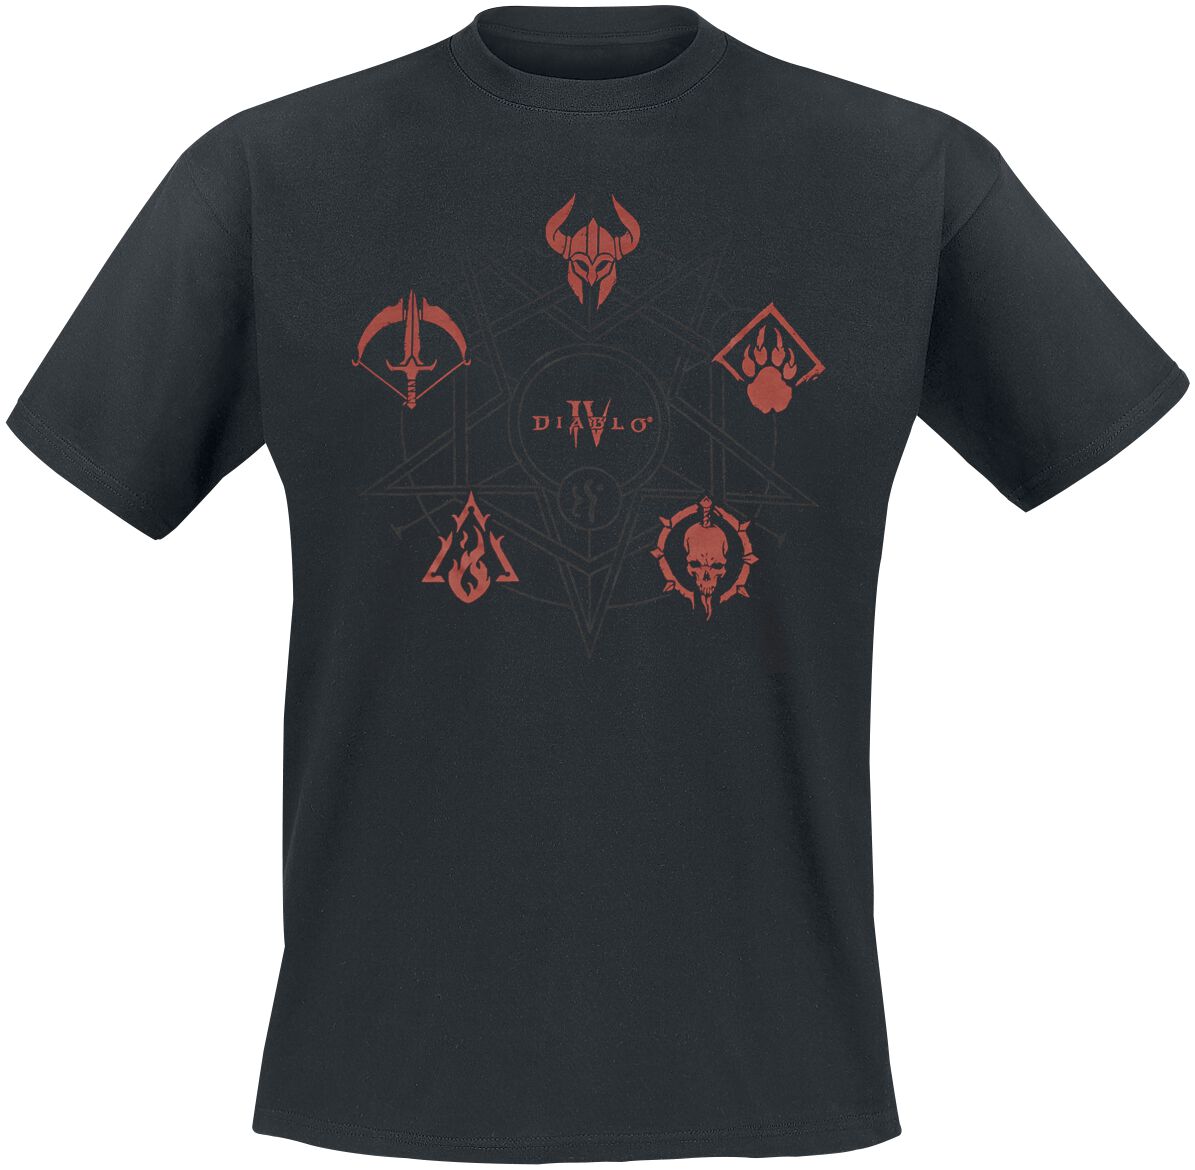 Diablo 4 - Class Icons T-Shirt schwarz in L